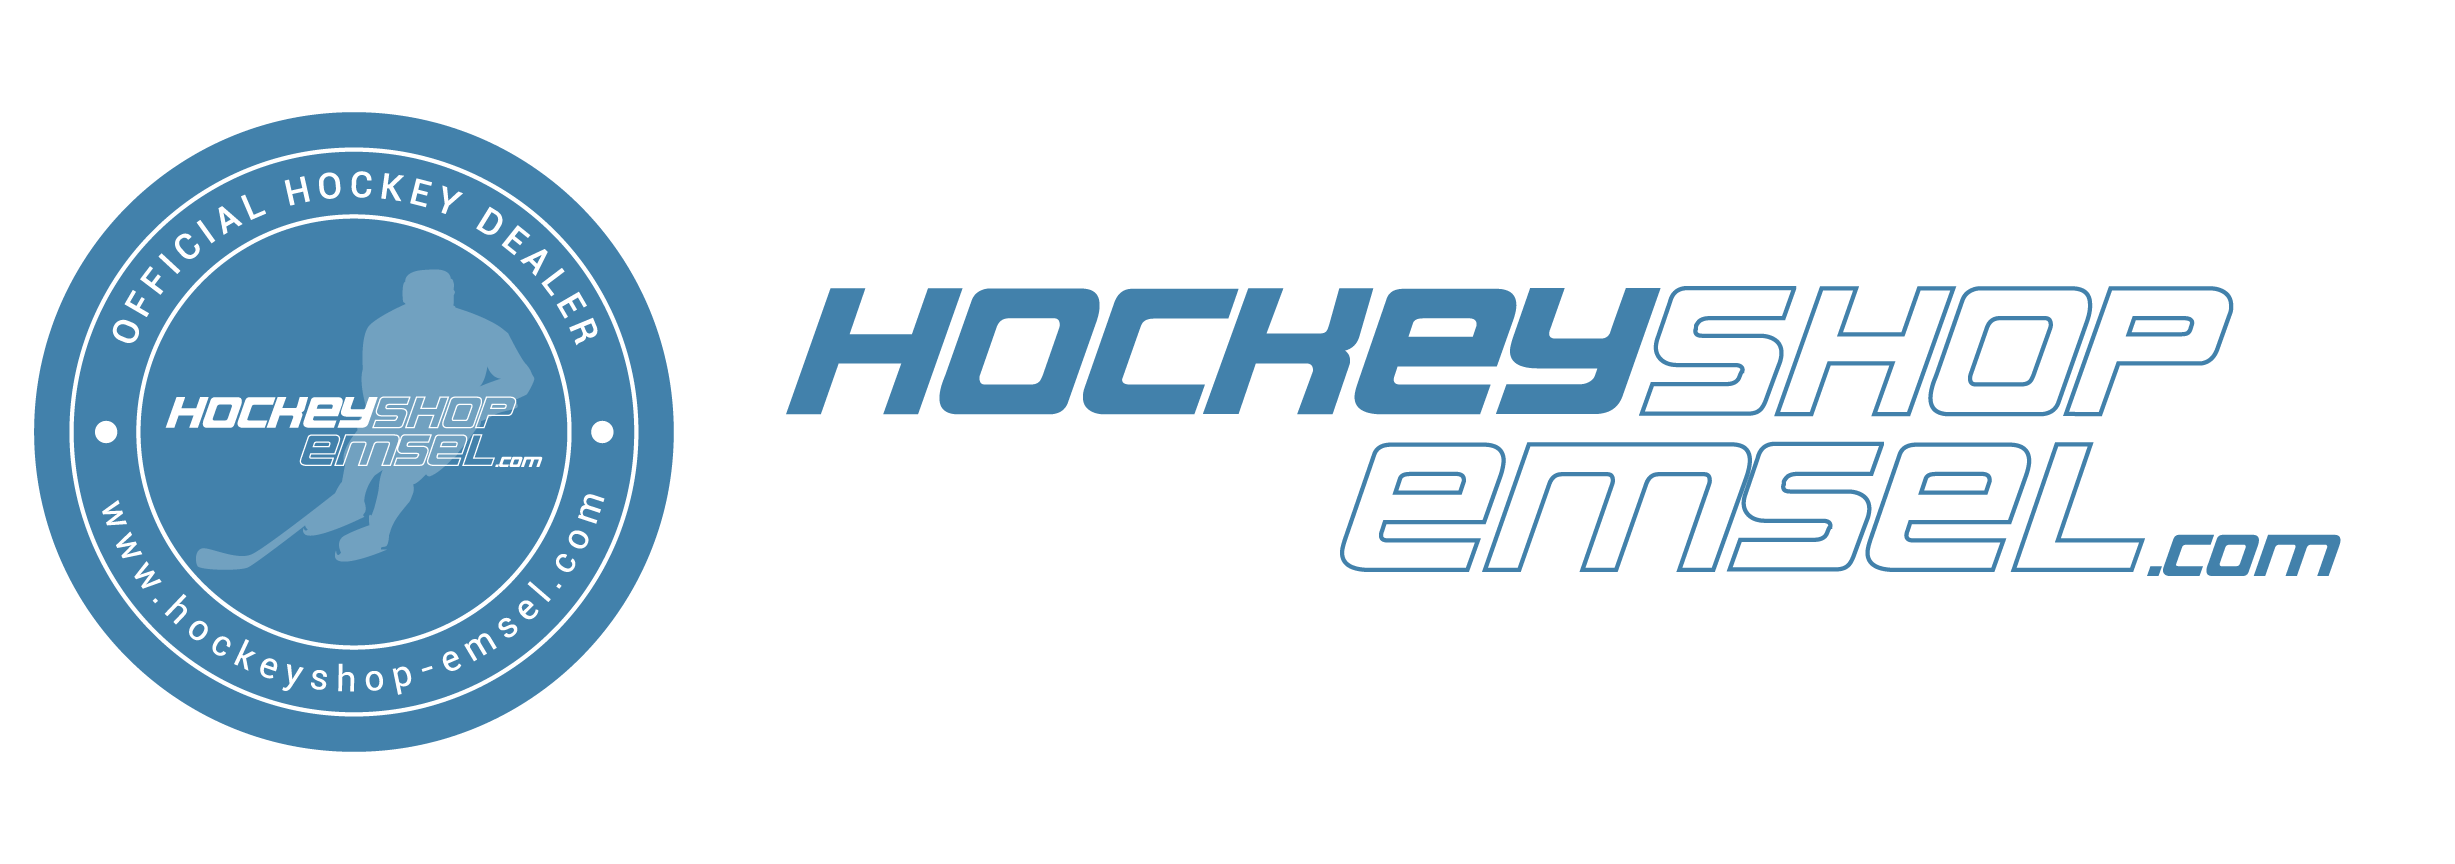 hockeyshop-emsel.com